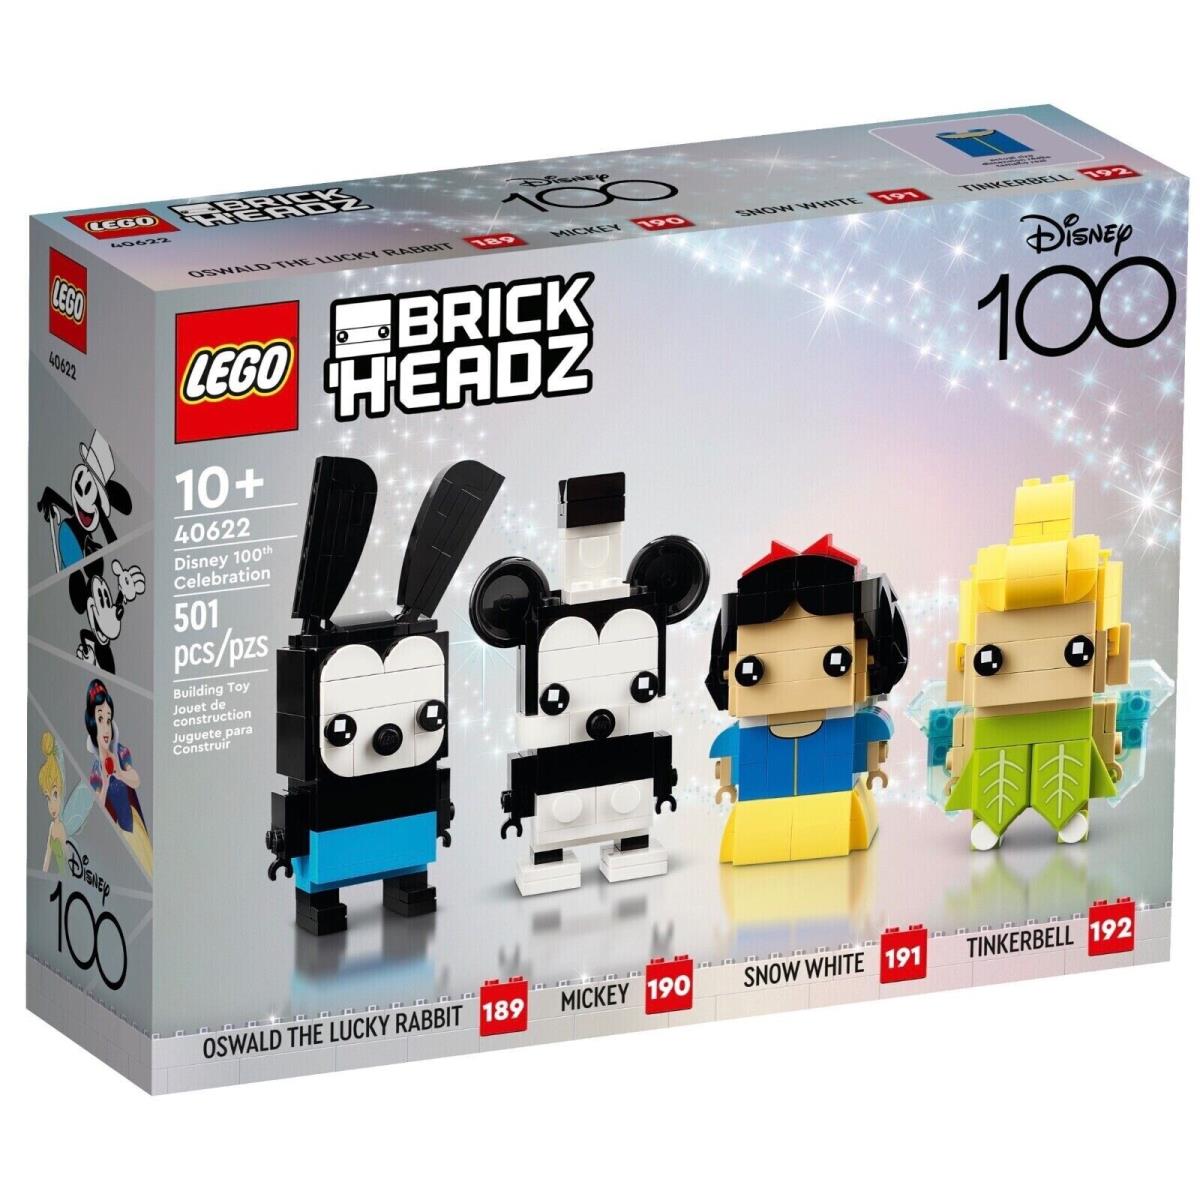 Lego Brickheadz Disney 100th Celebration 40622 501 Pcs Building Kit Toy Set